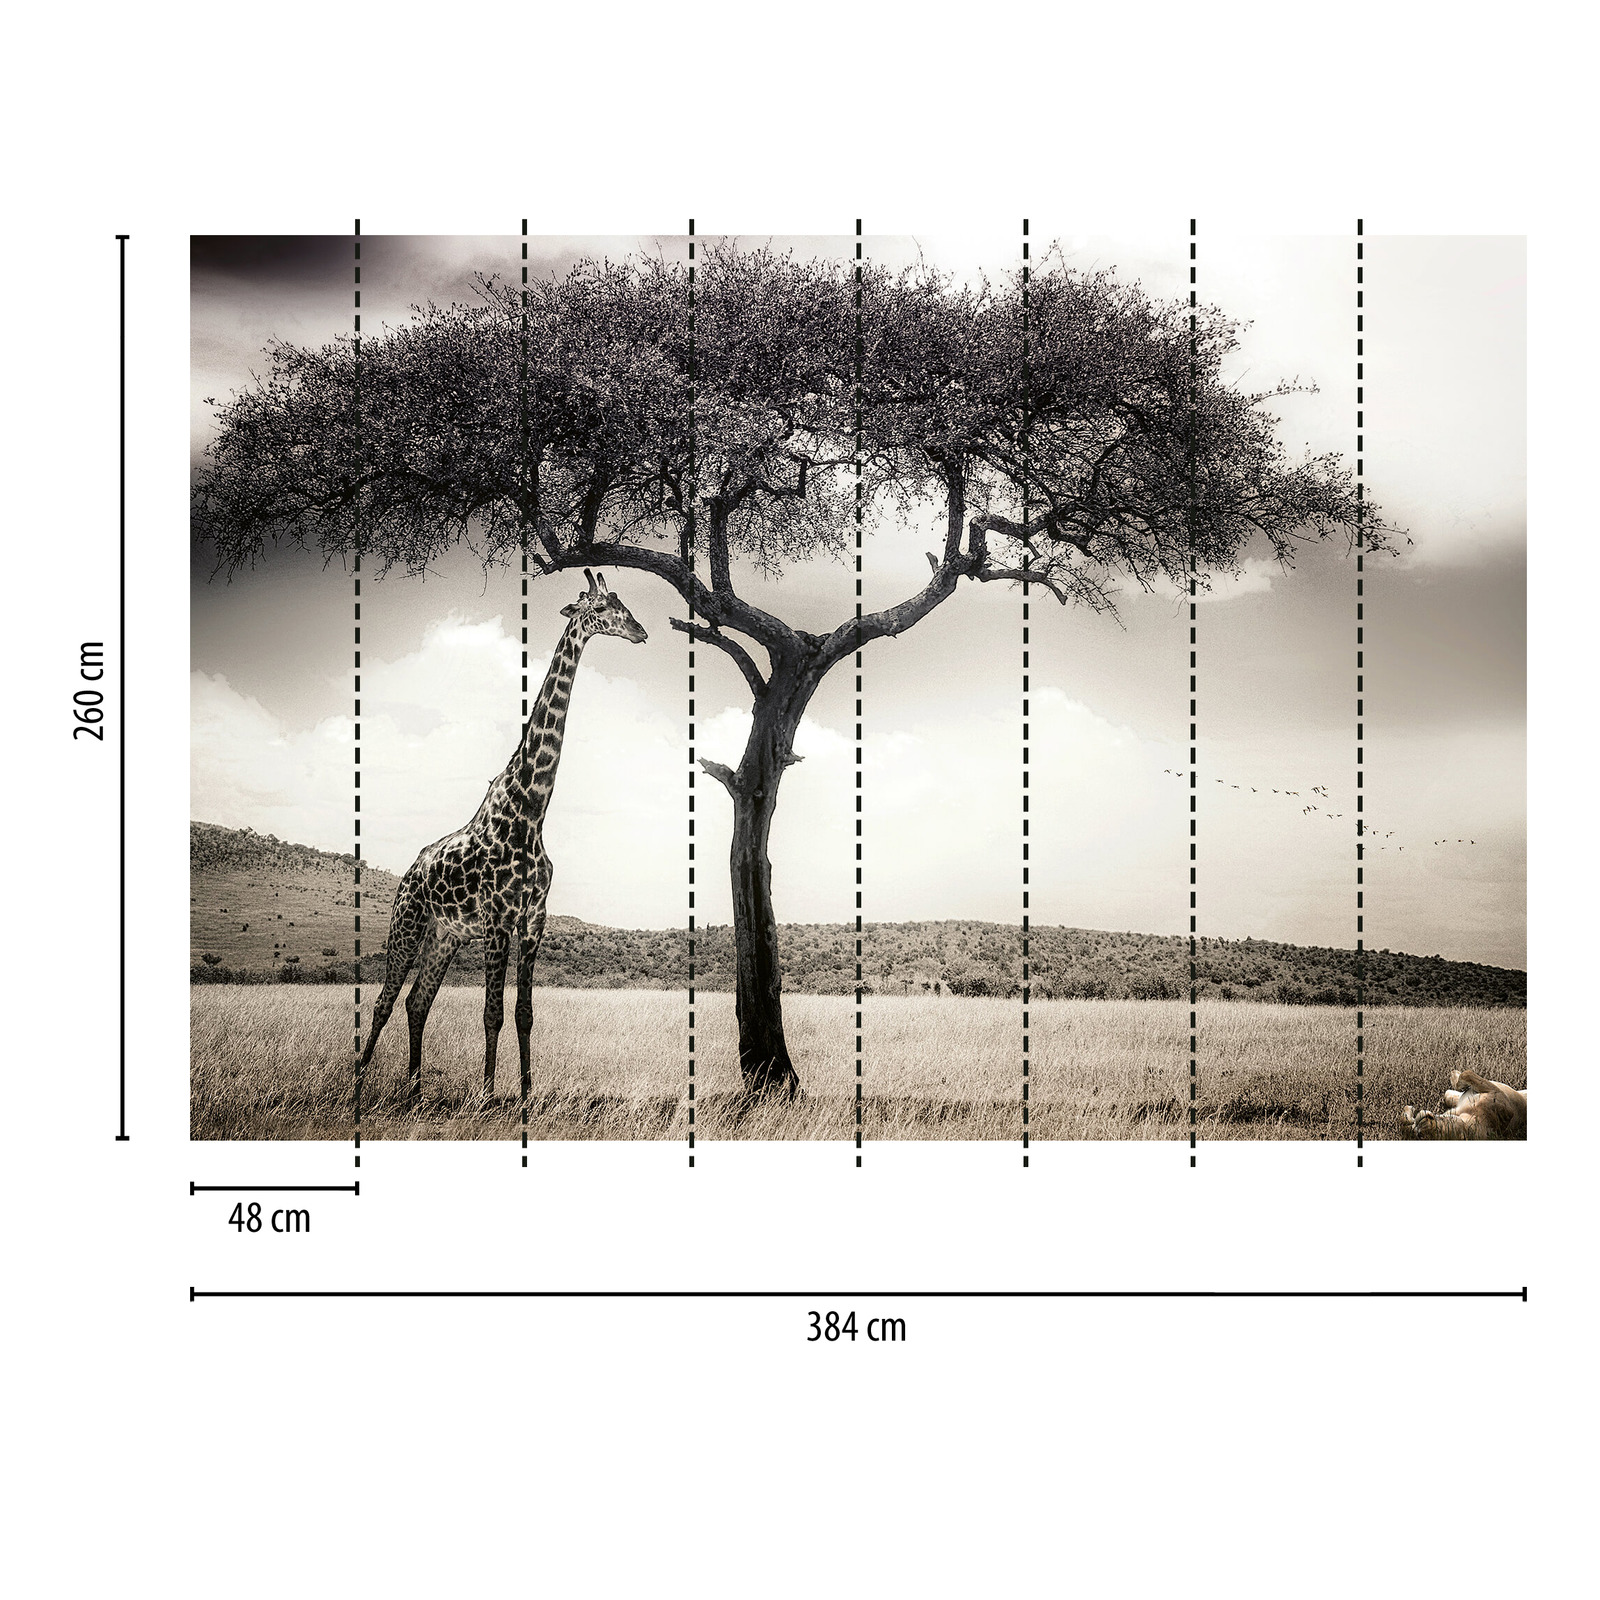             Photo wallpaper safari animal giraffe - grey, white, black
        